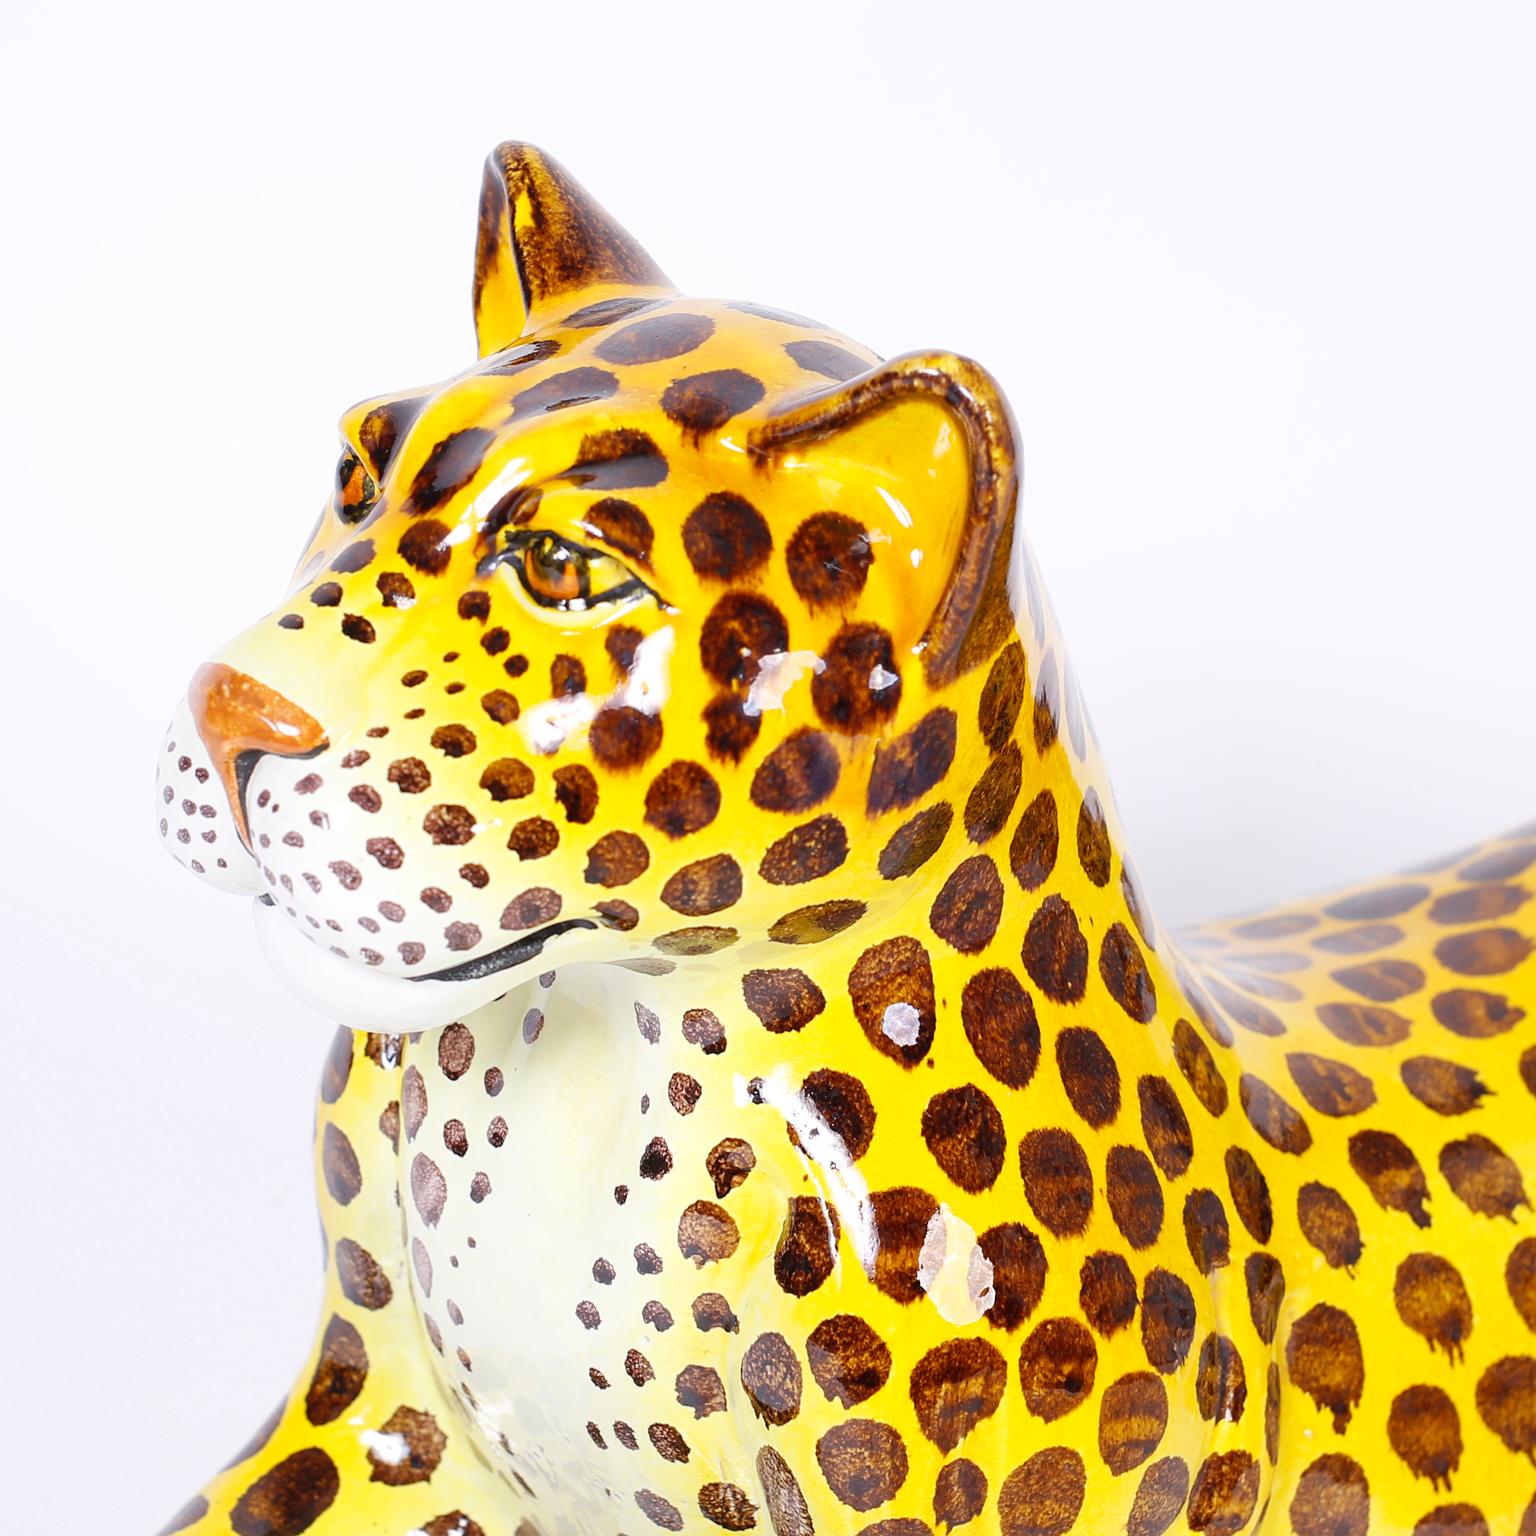 Impressive midcentury Italian leopard sculpture hand decorated, glazed and in repose.